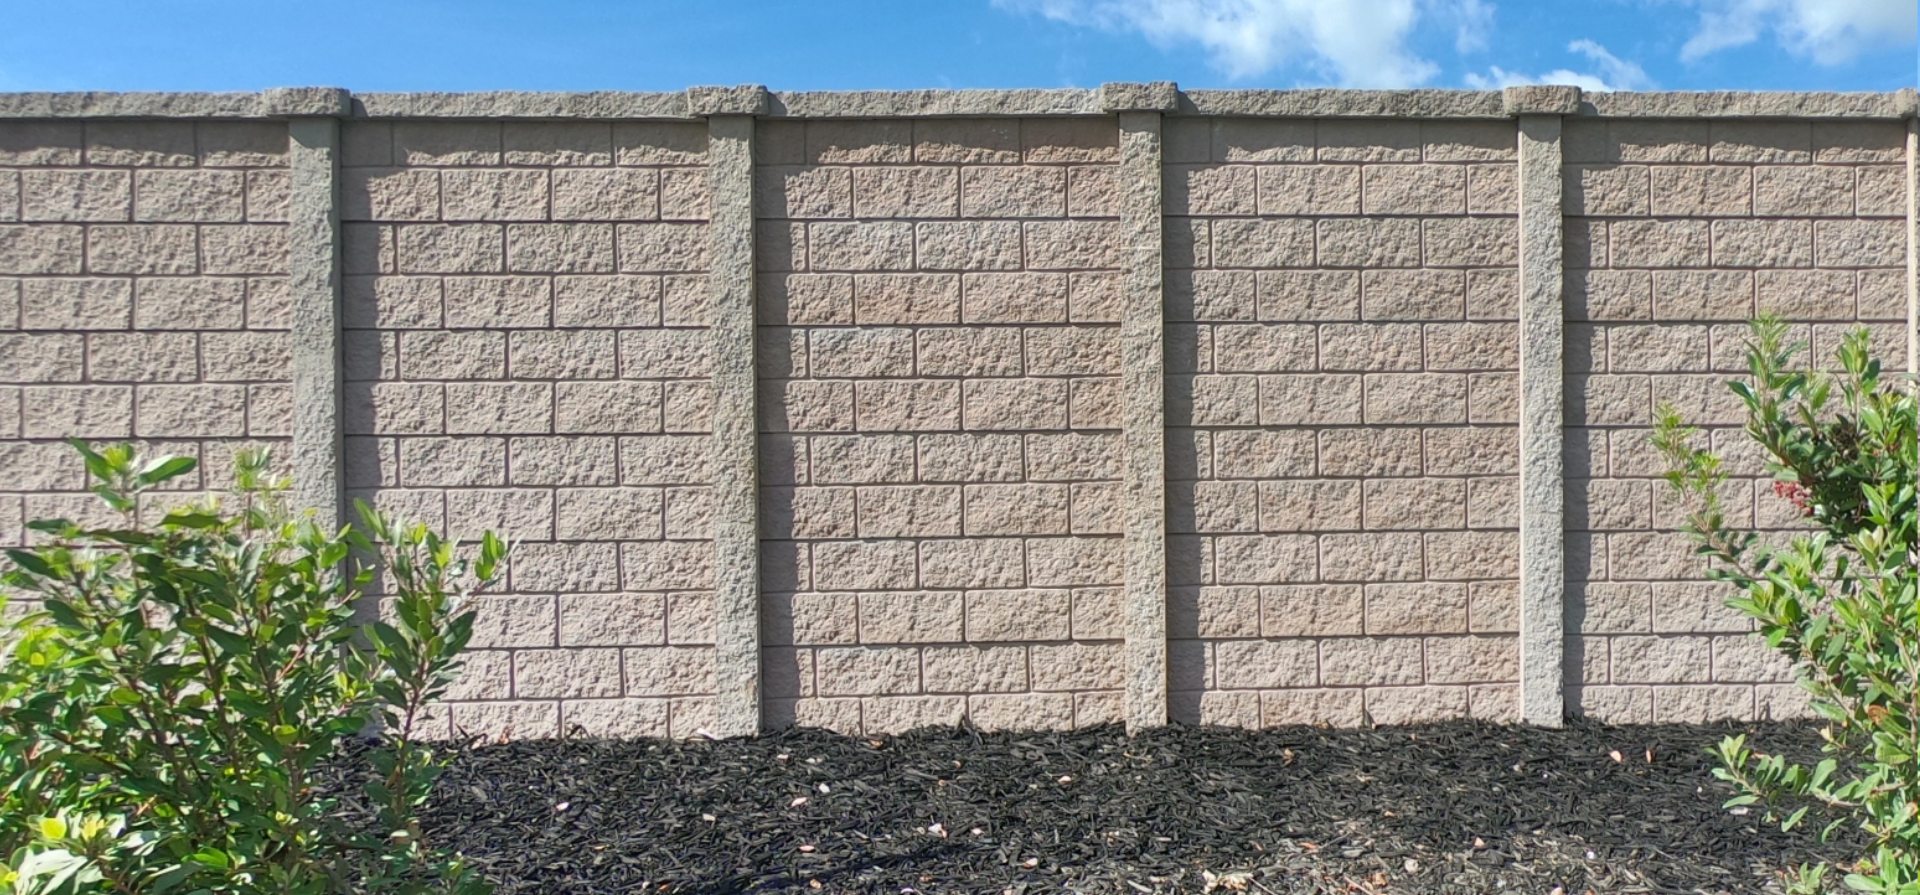 Chiselstone concrete wall